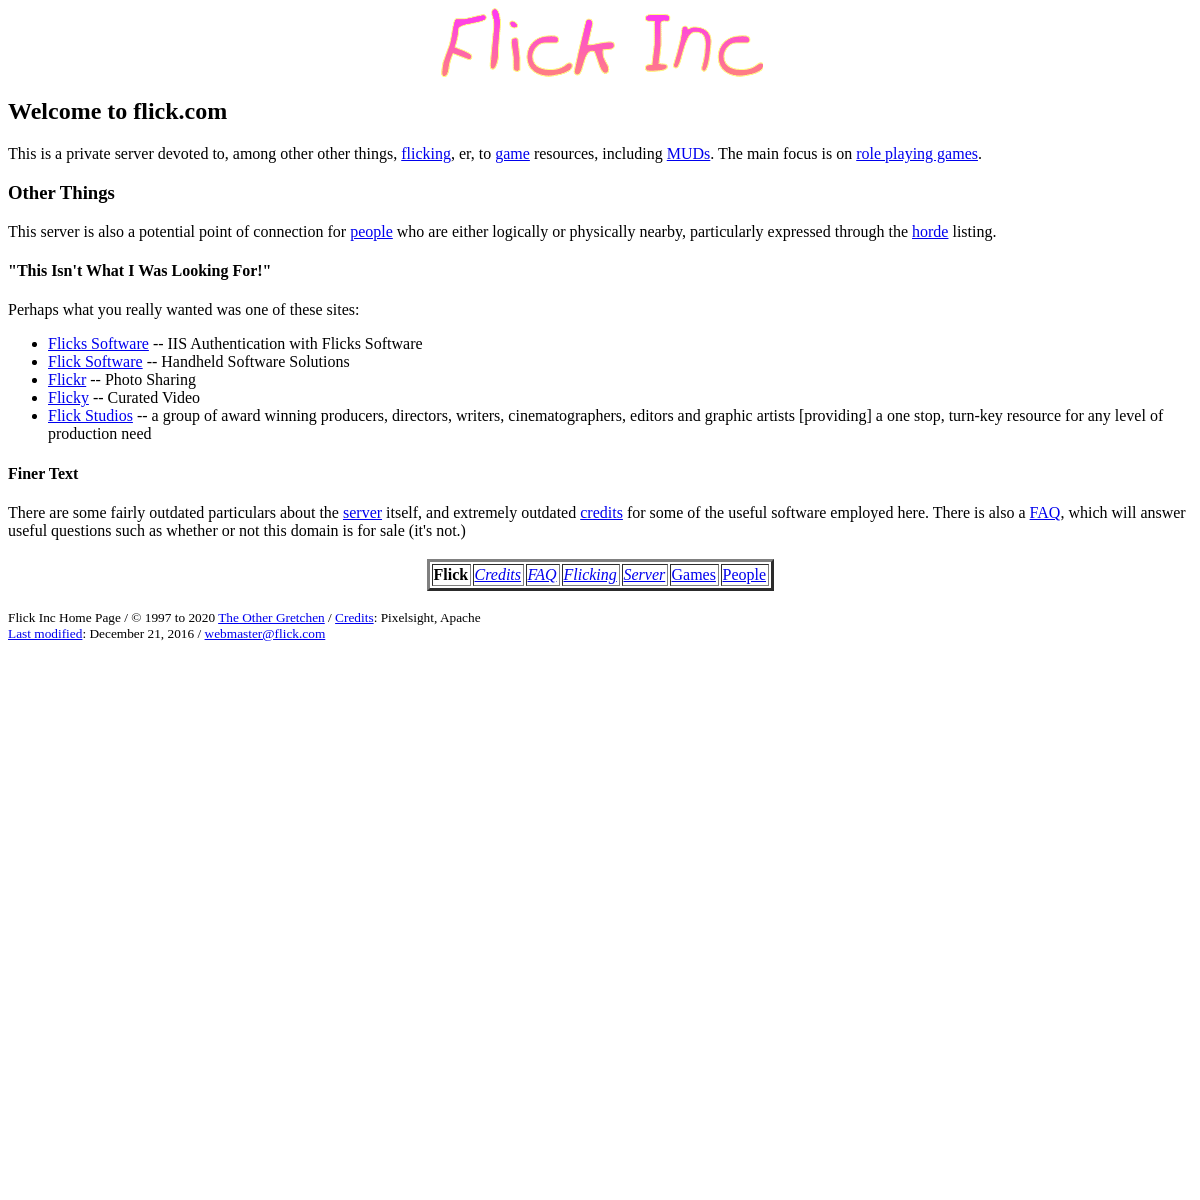 A complete backup of flick.com